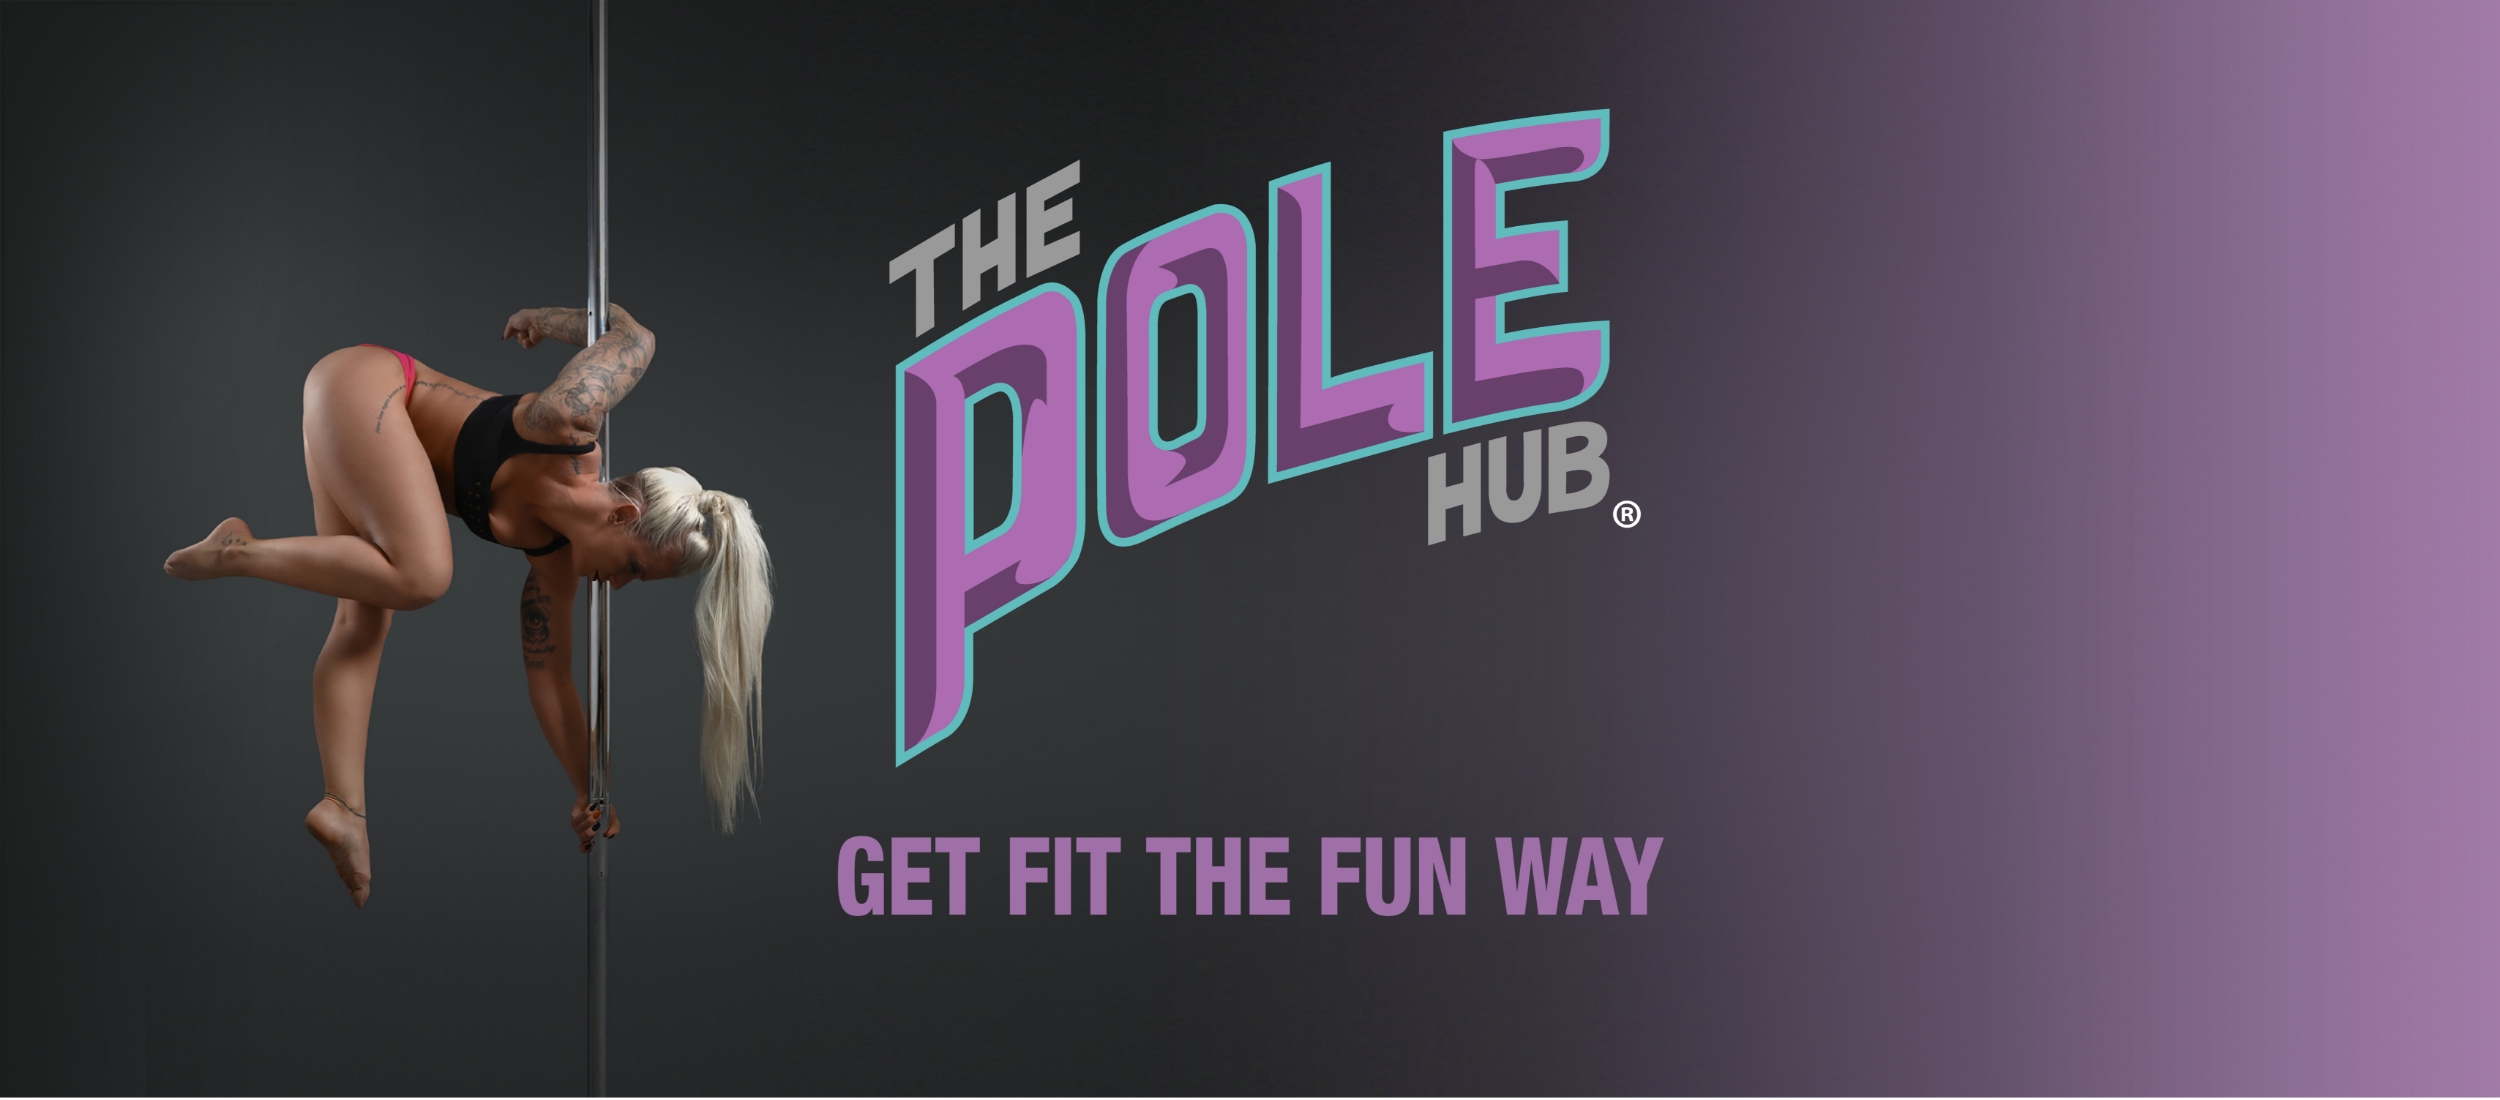 The Pole Hub - get fit the fun way